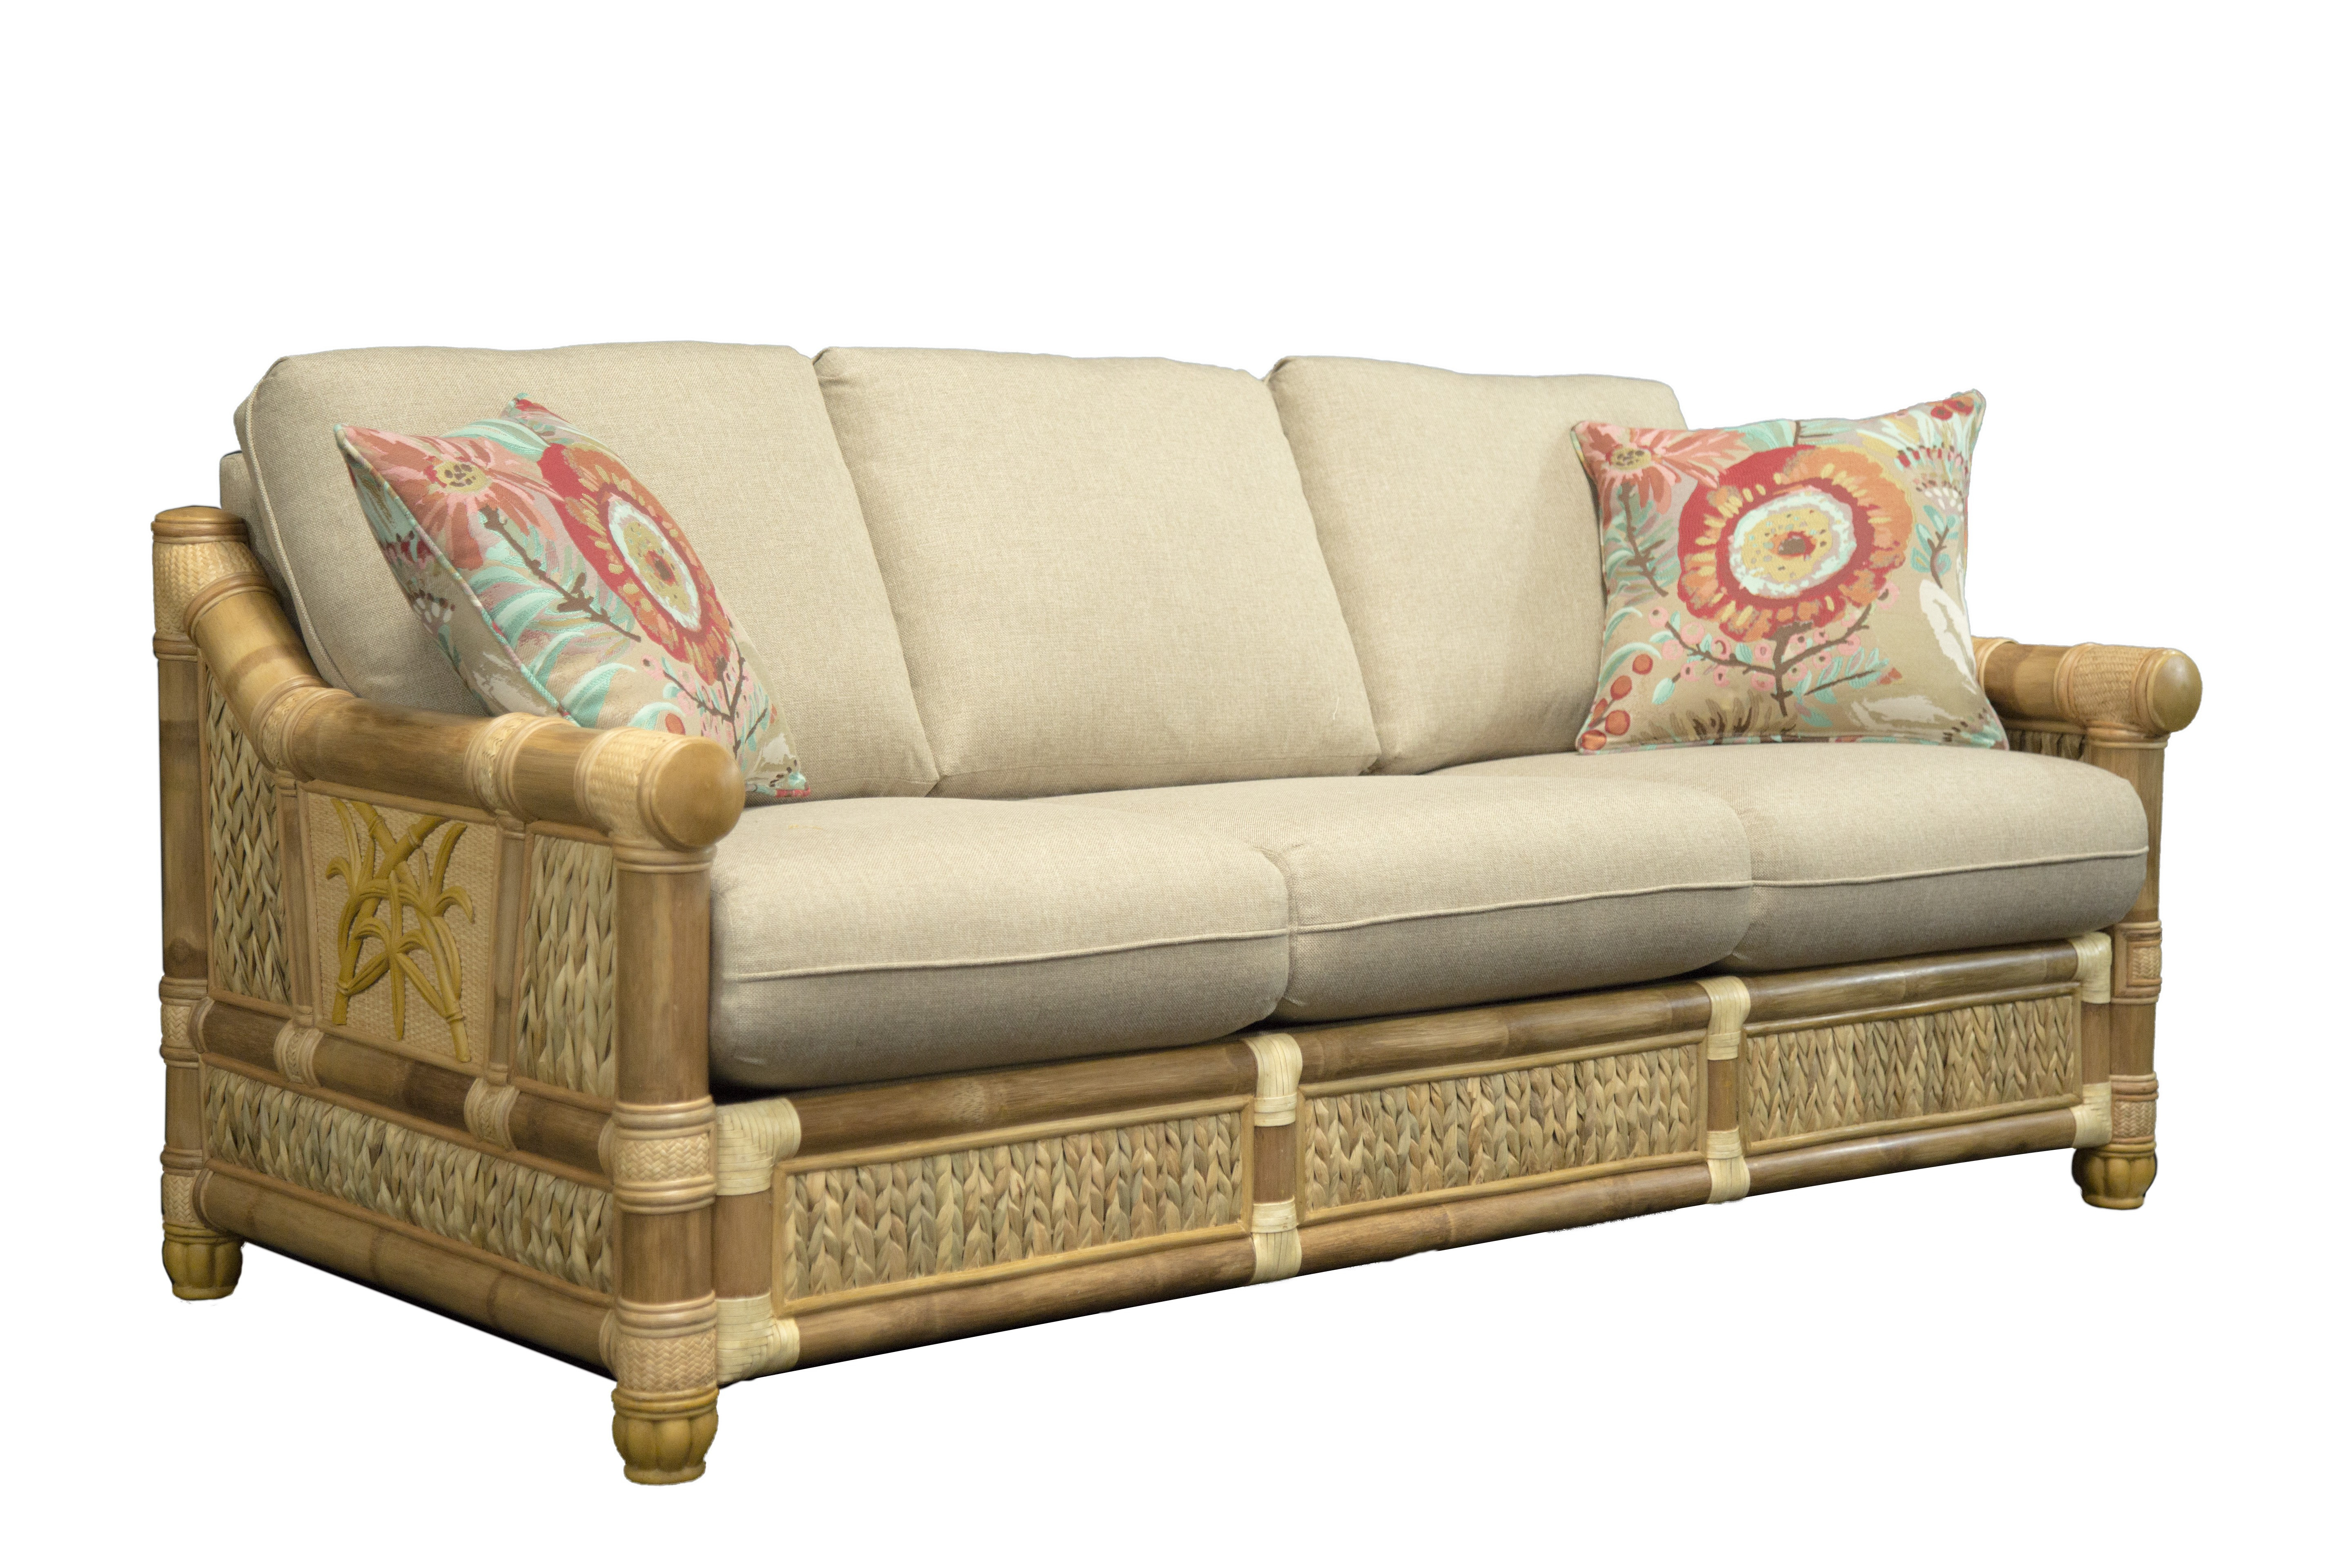 Best ideas about Tempur Pedic Sleeper Sofa
. Save or Pin Decorating Enchanting Design Tempurpedic Sleeper Sofa Now.